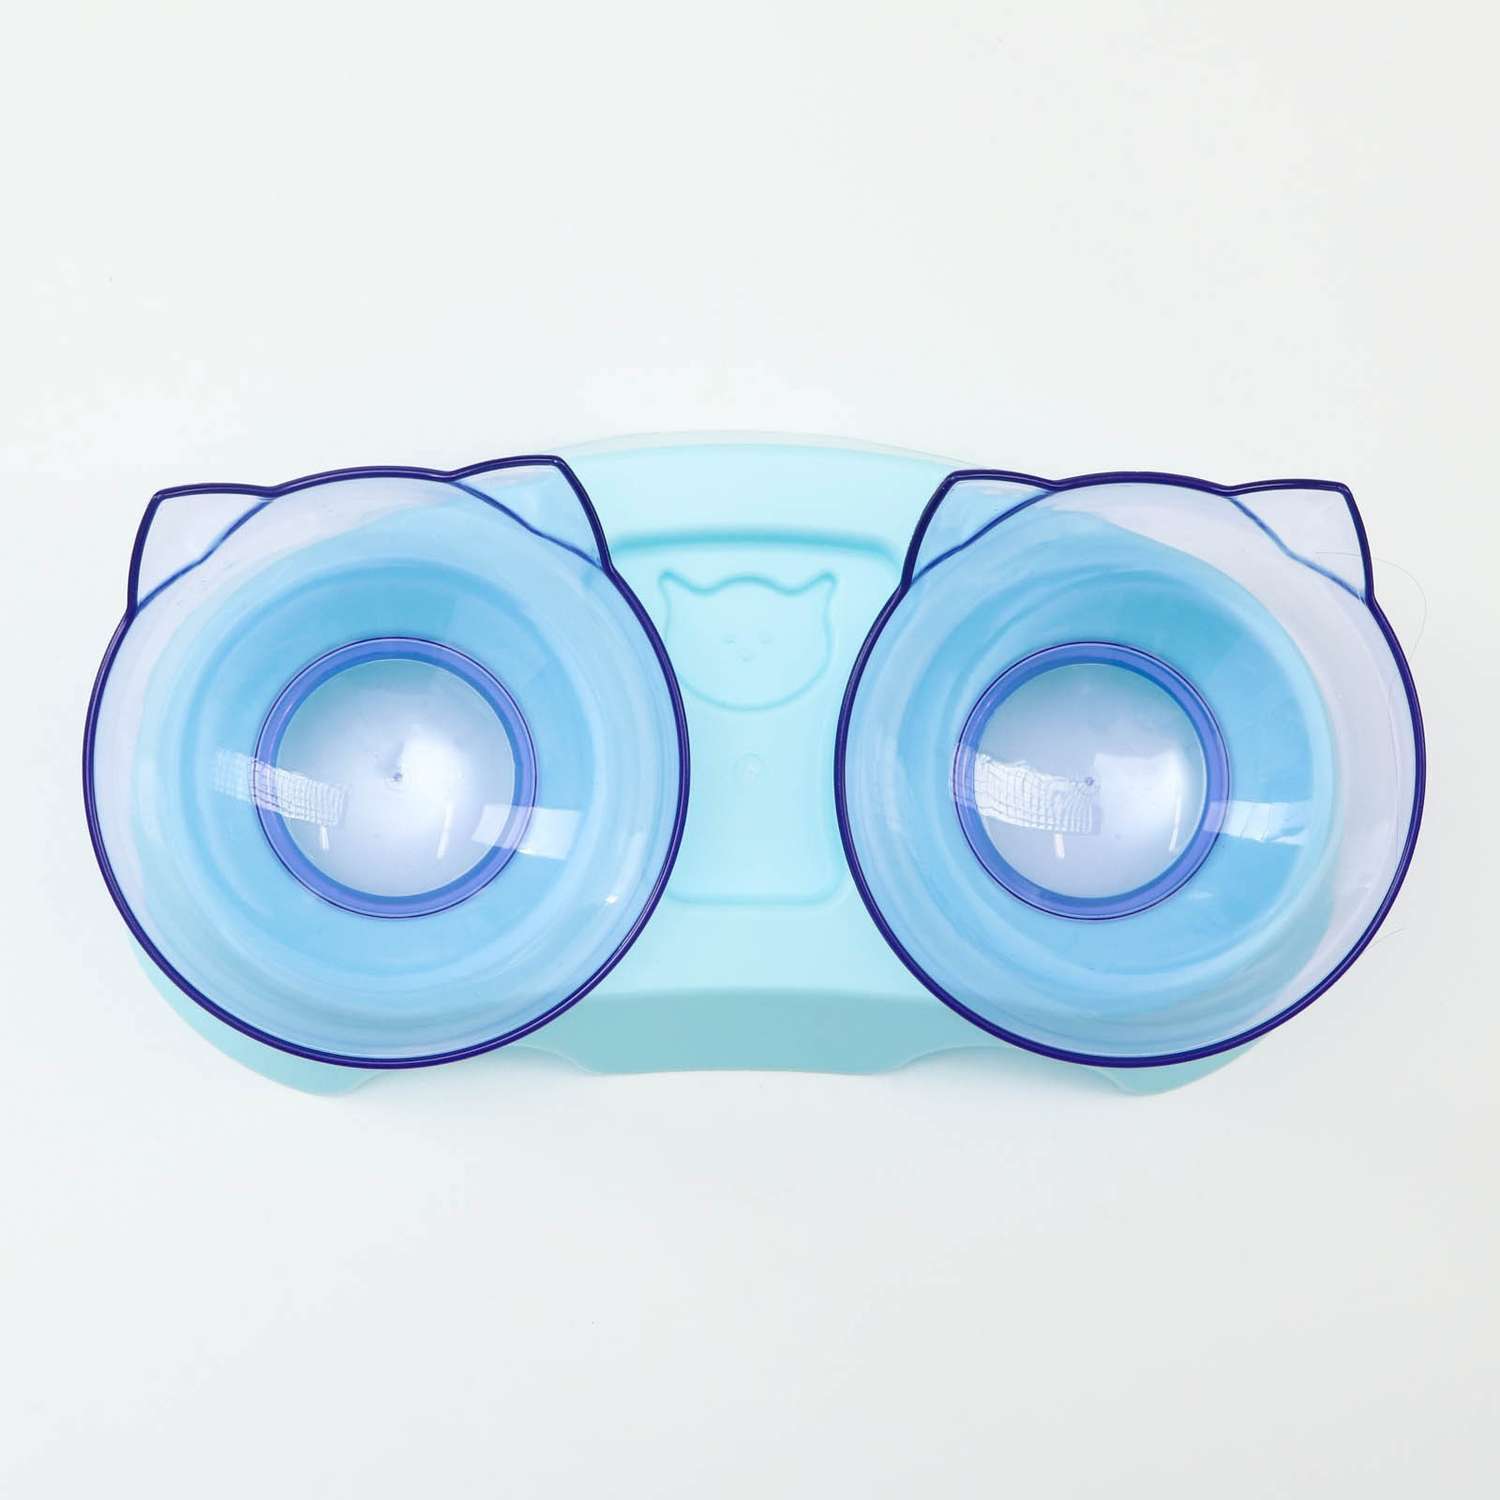 Миски Пижон пластиковые на голубой подставке 30х15.5х12 см прозрачные - фото 2